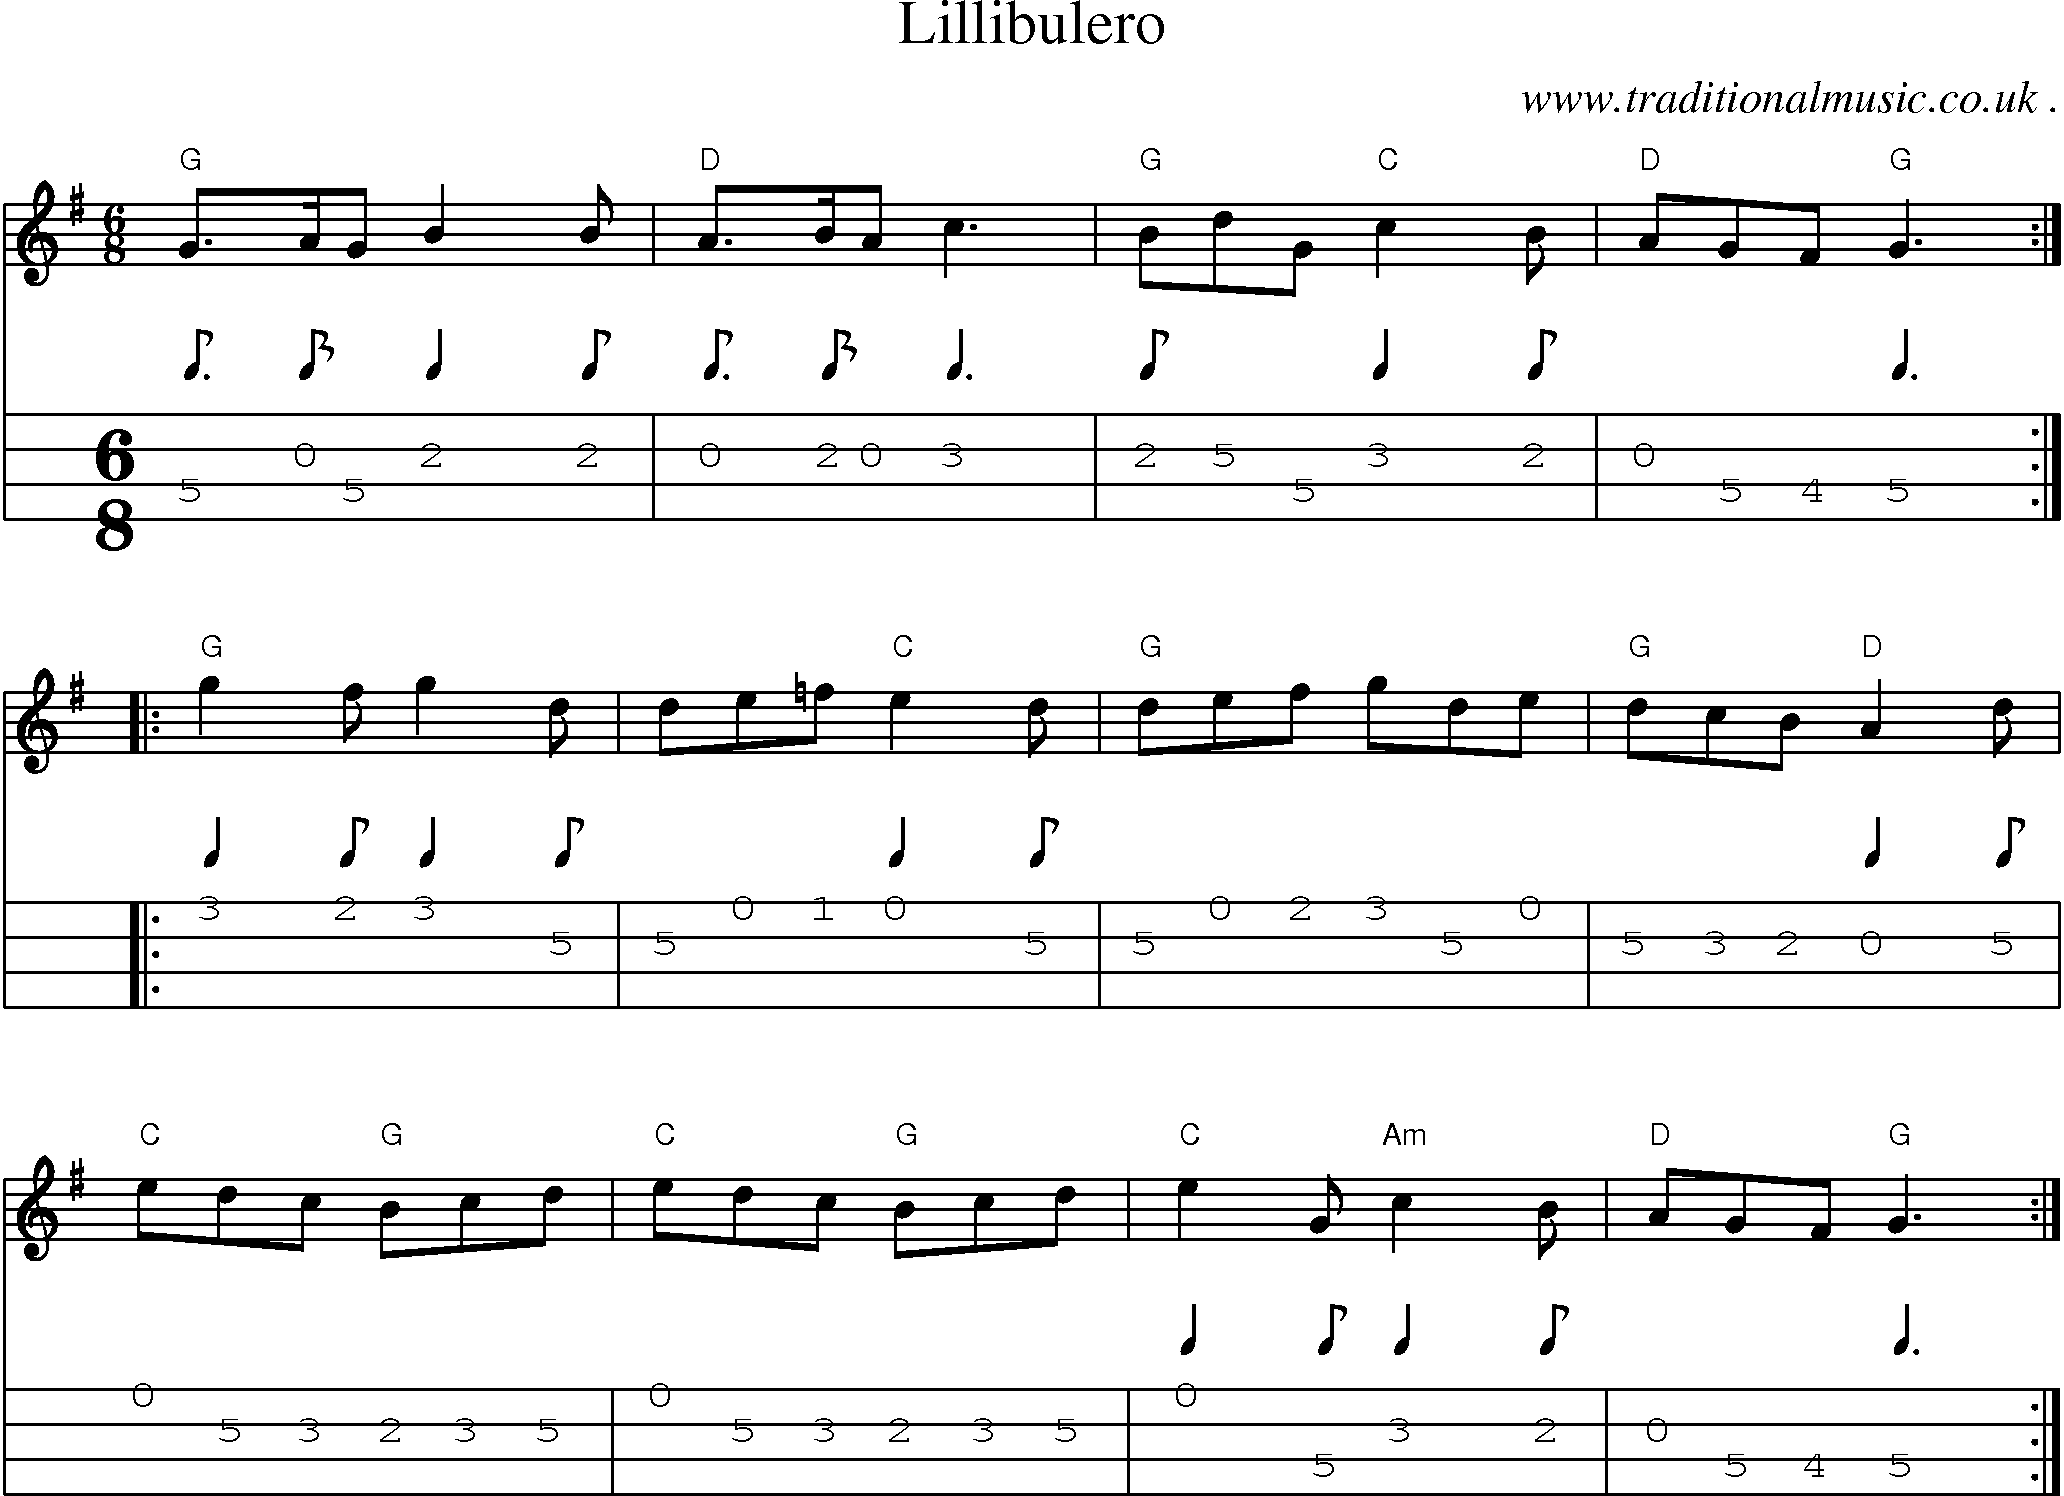 Music Score and Guitar Tabs for Lillibulero